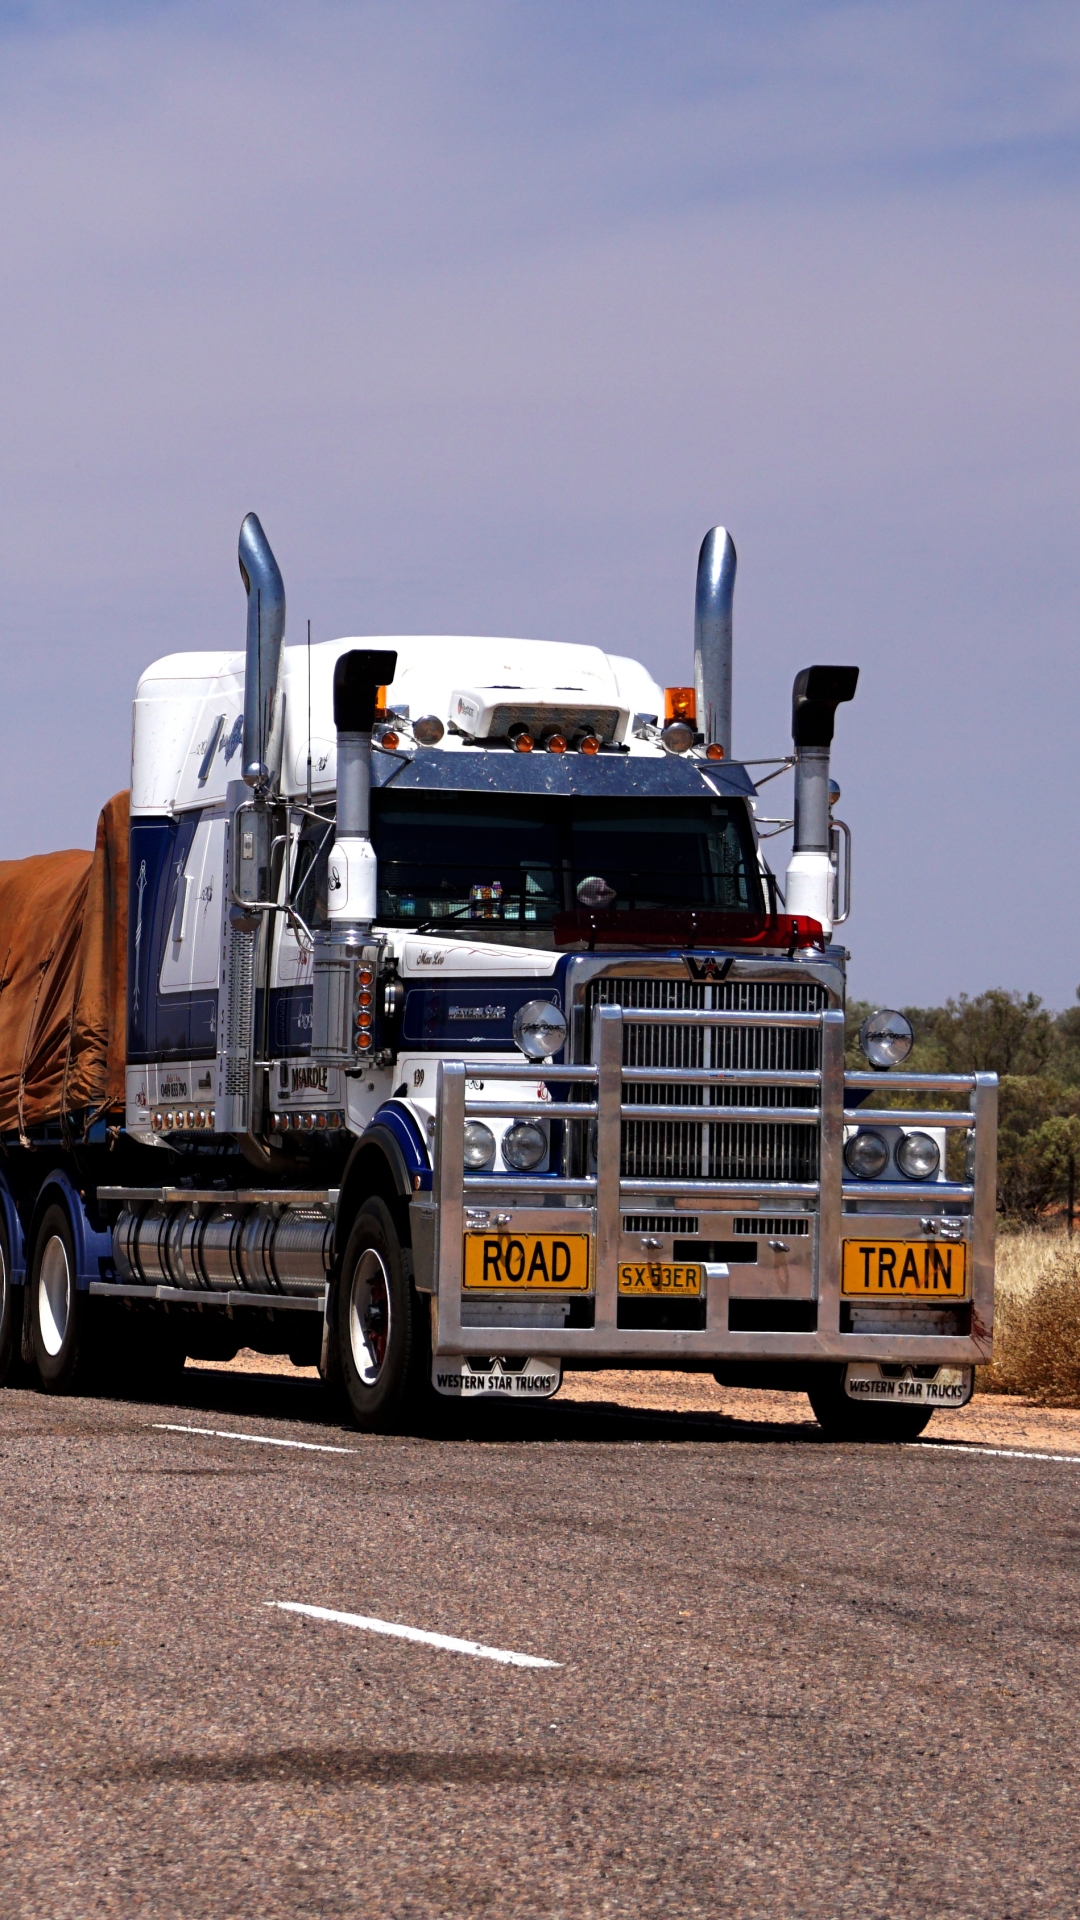 australia, vehicles, western star, road, vehicle, road train, outback